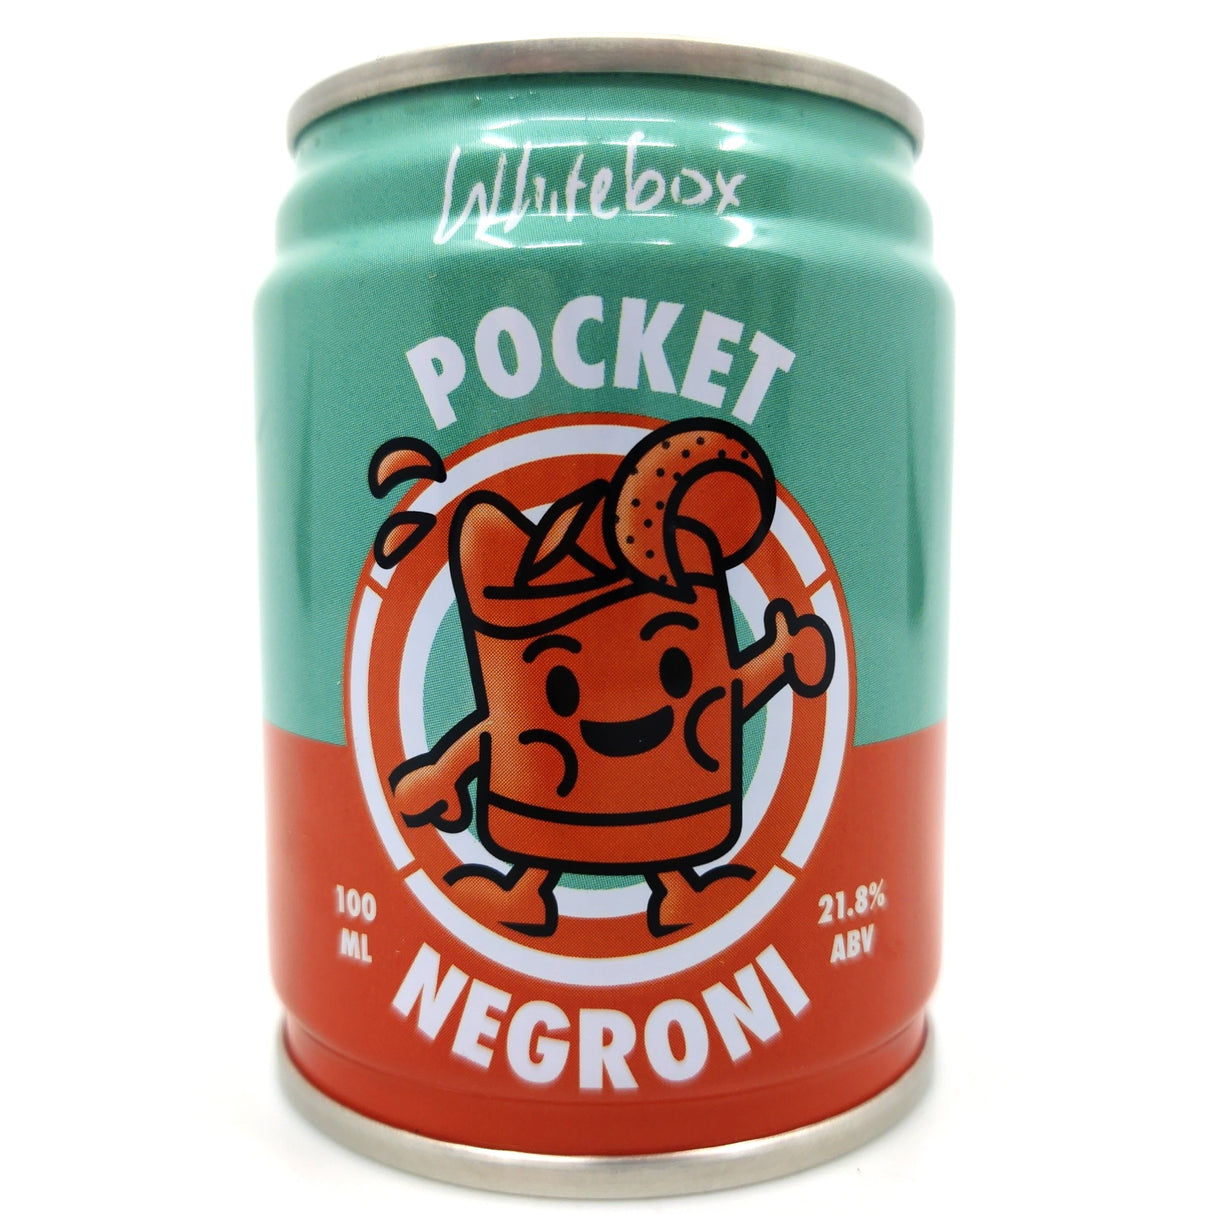 Whitebox Pocket Negroni 21.8% (100ml can)-Hop Burns & Black